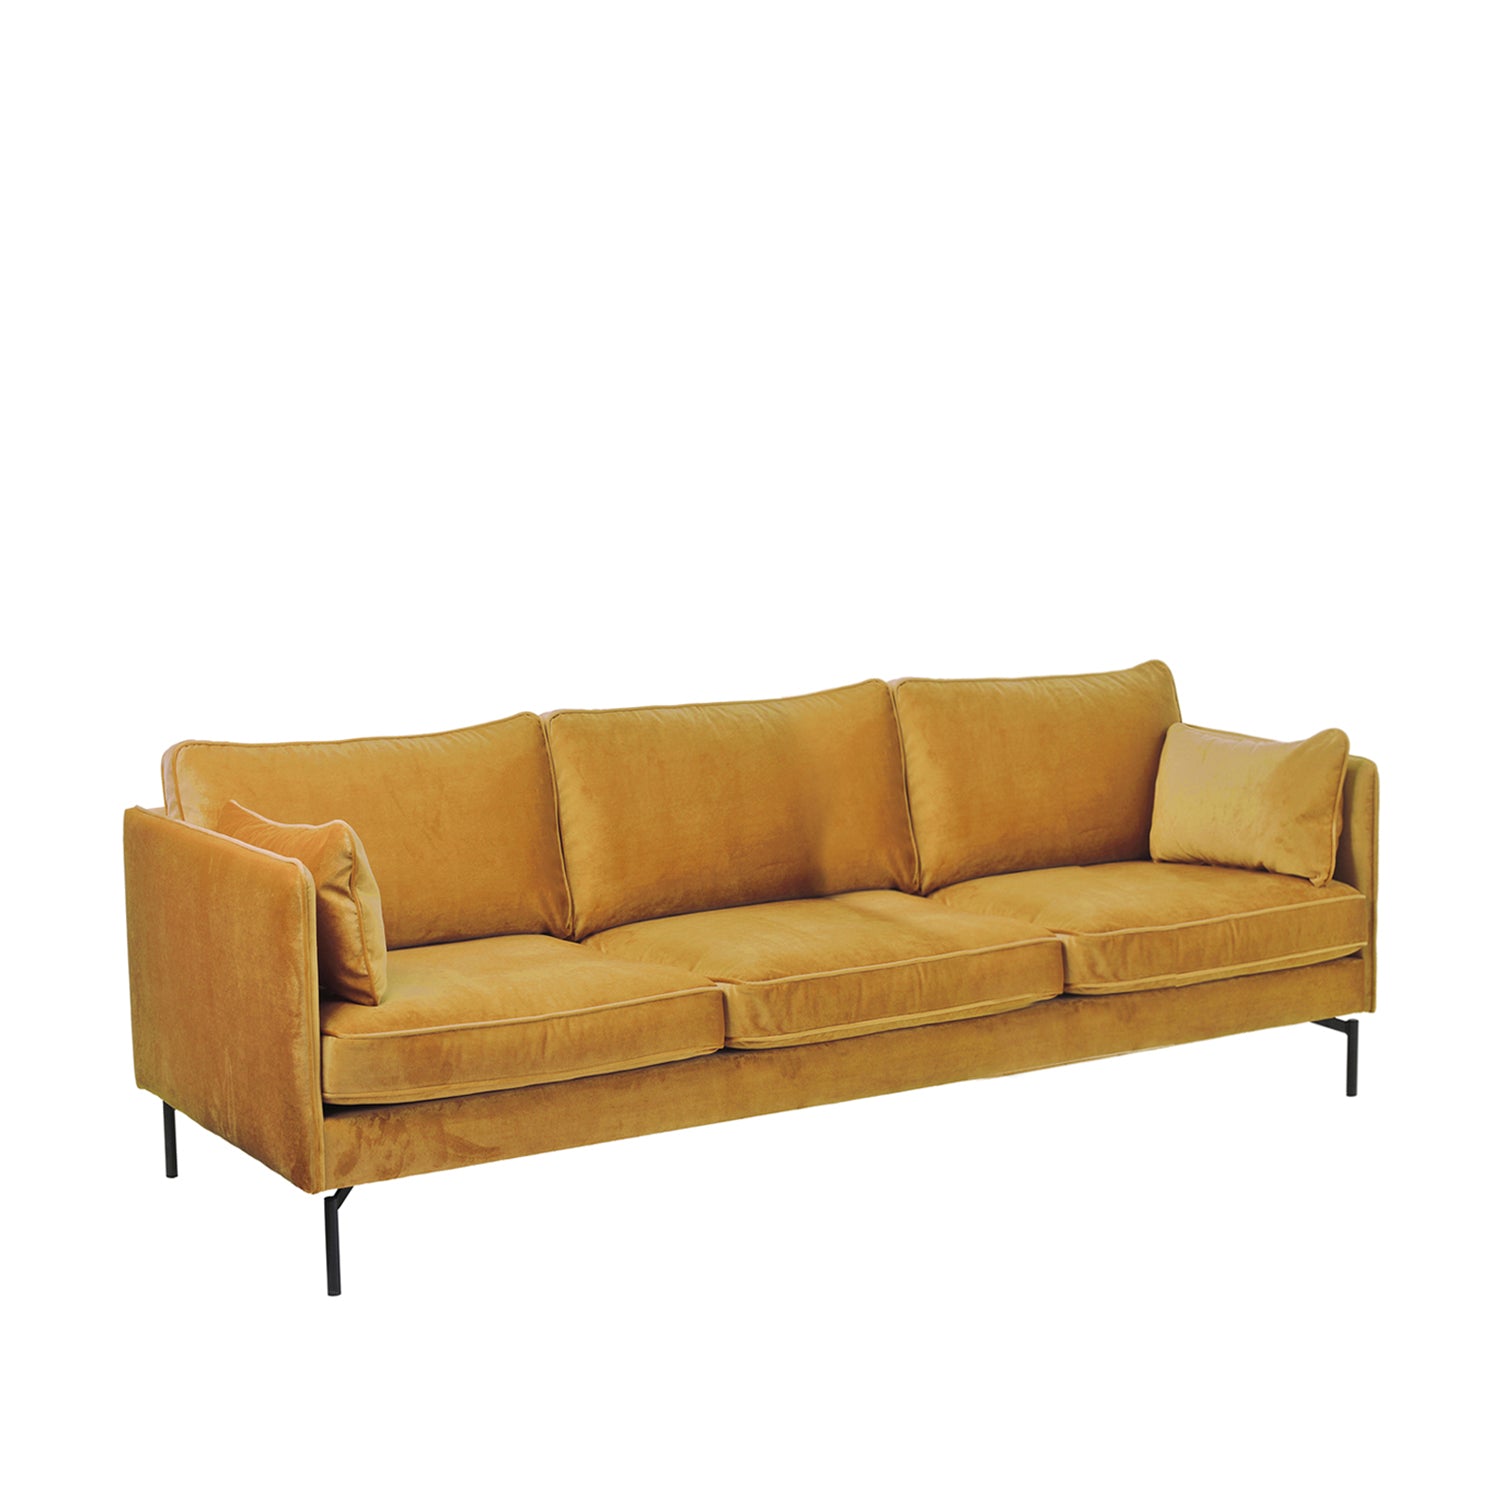 PPno.2 Sofa XL - The Design Choice